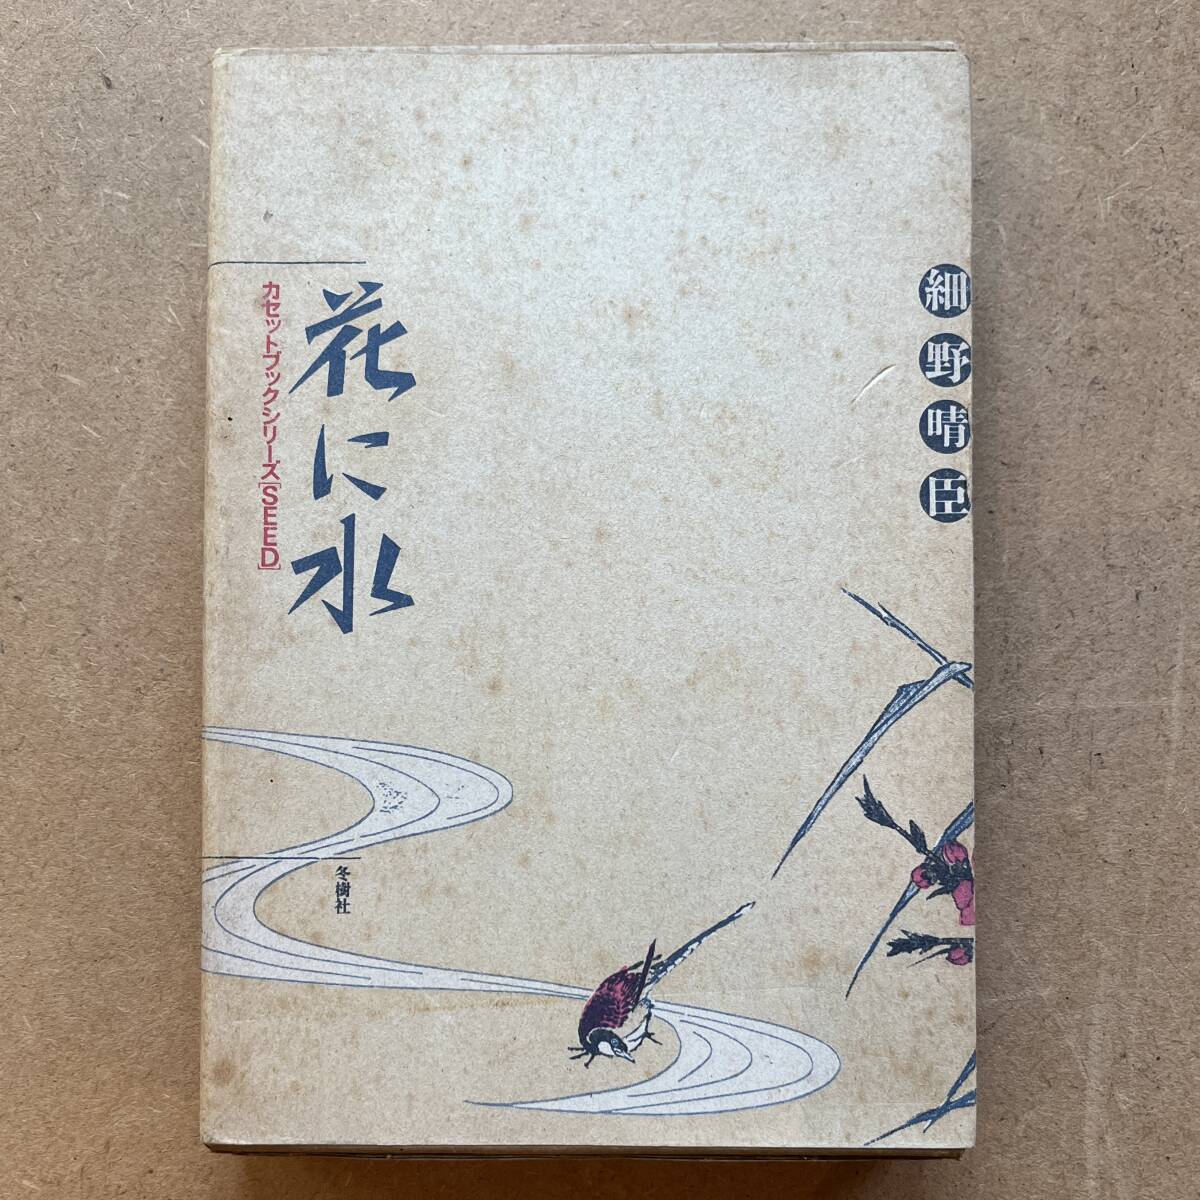 # редкостный! кассета книжка серии [SEED]# Hosono Haruomi Haruomi Hosono / цветок . вода ( зима . фирма - T-980017) эмбиент / Muji Ryohin /. гарантия гора / средний . новый один 